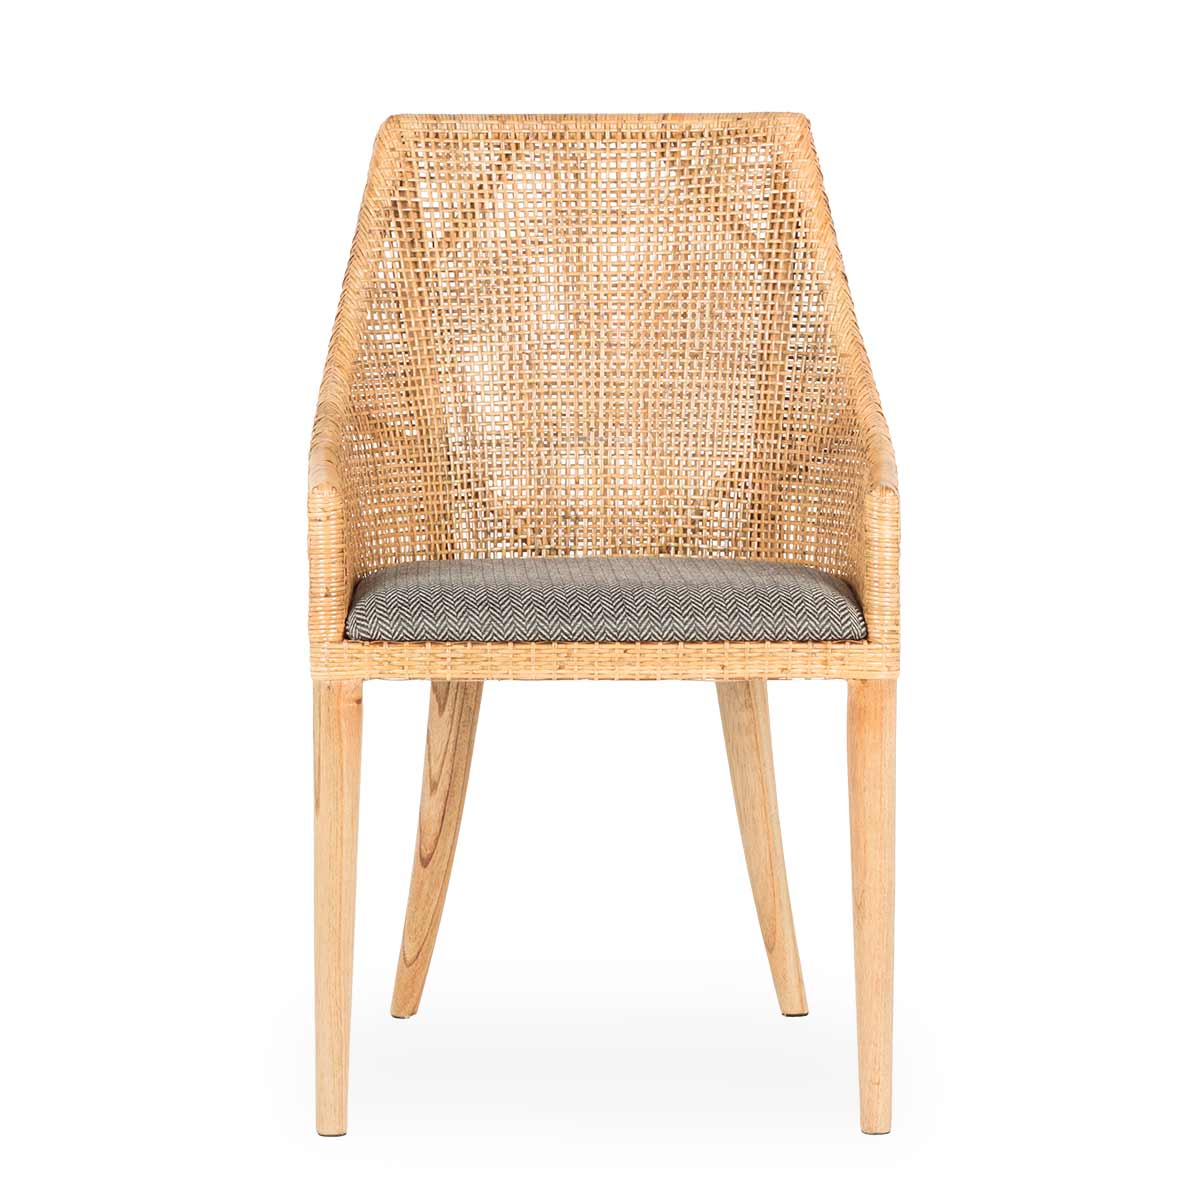 وحي سيرة شخصية تتضمن  Commercial rattan chairs Nashville. Interior design furniture.